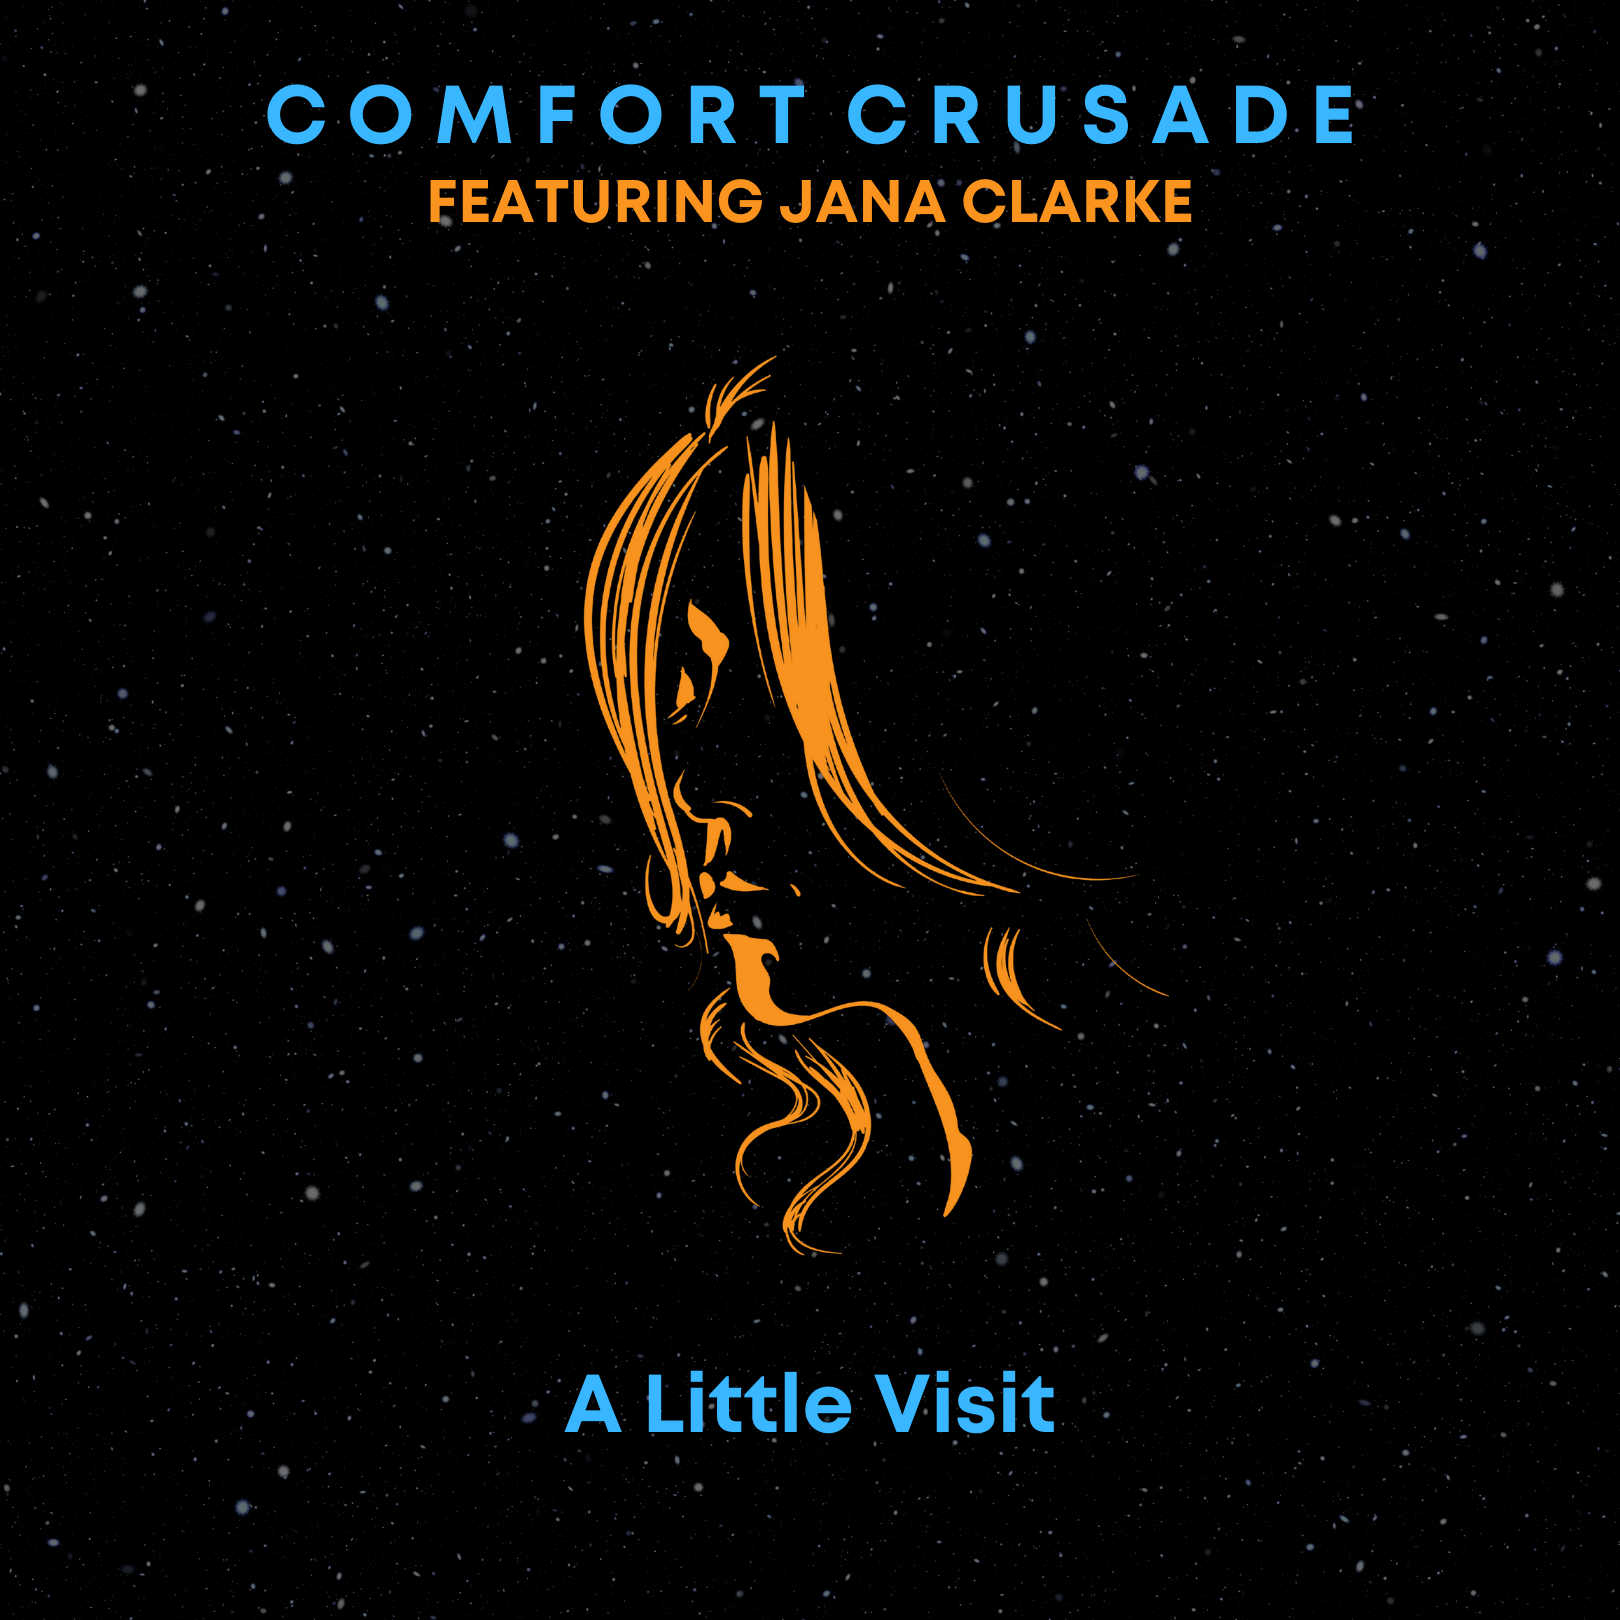 A Little Visit by Comfort Crusade feat. Jana Clarke